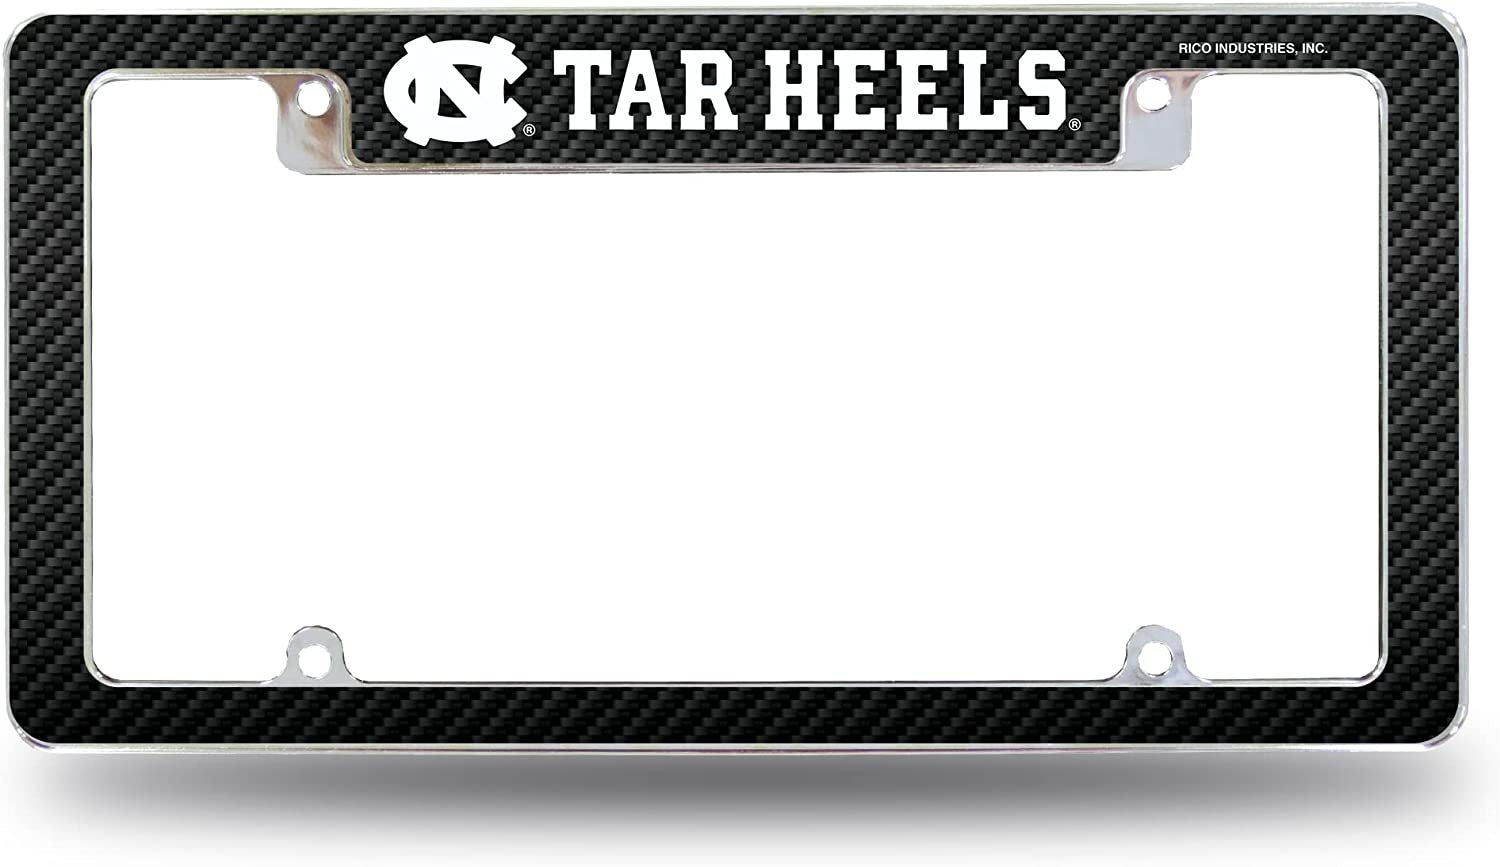 University of North Carolina Tar Heels Metal License Plate Frame Chrome Tag Cover Carbon Fiber Design 6x12 Inch